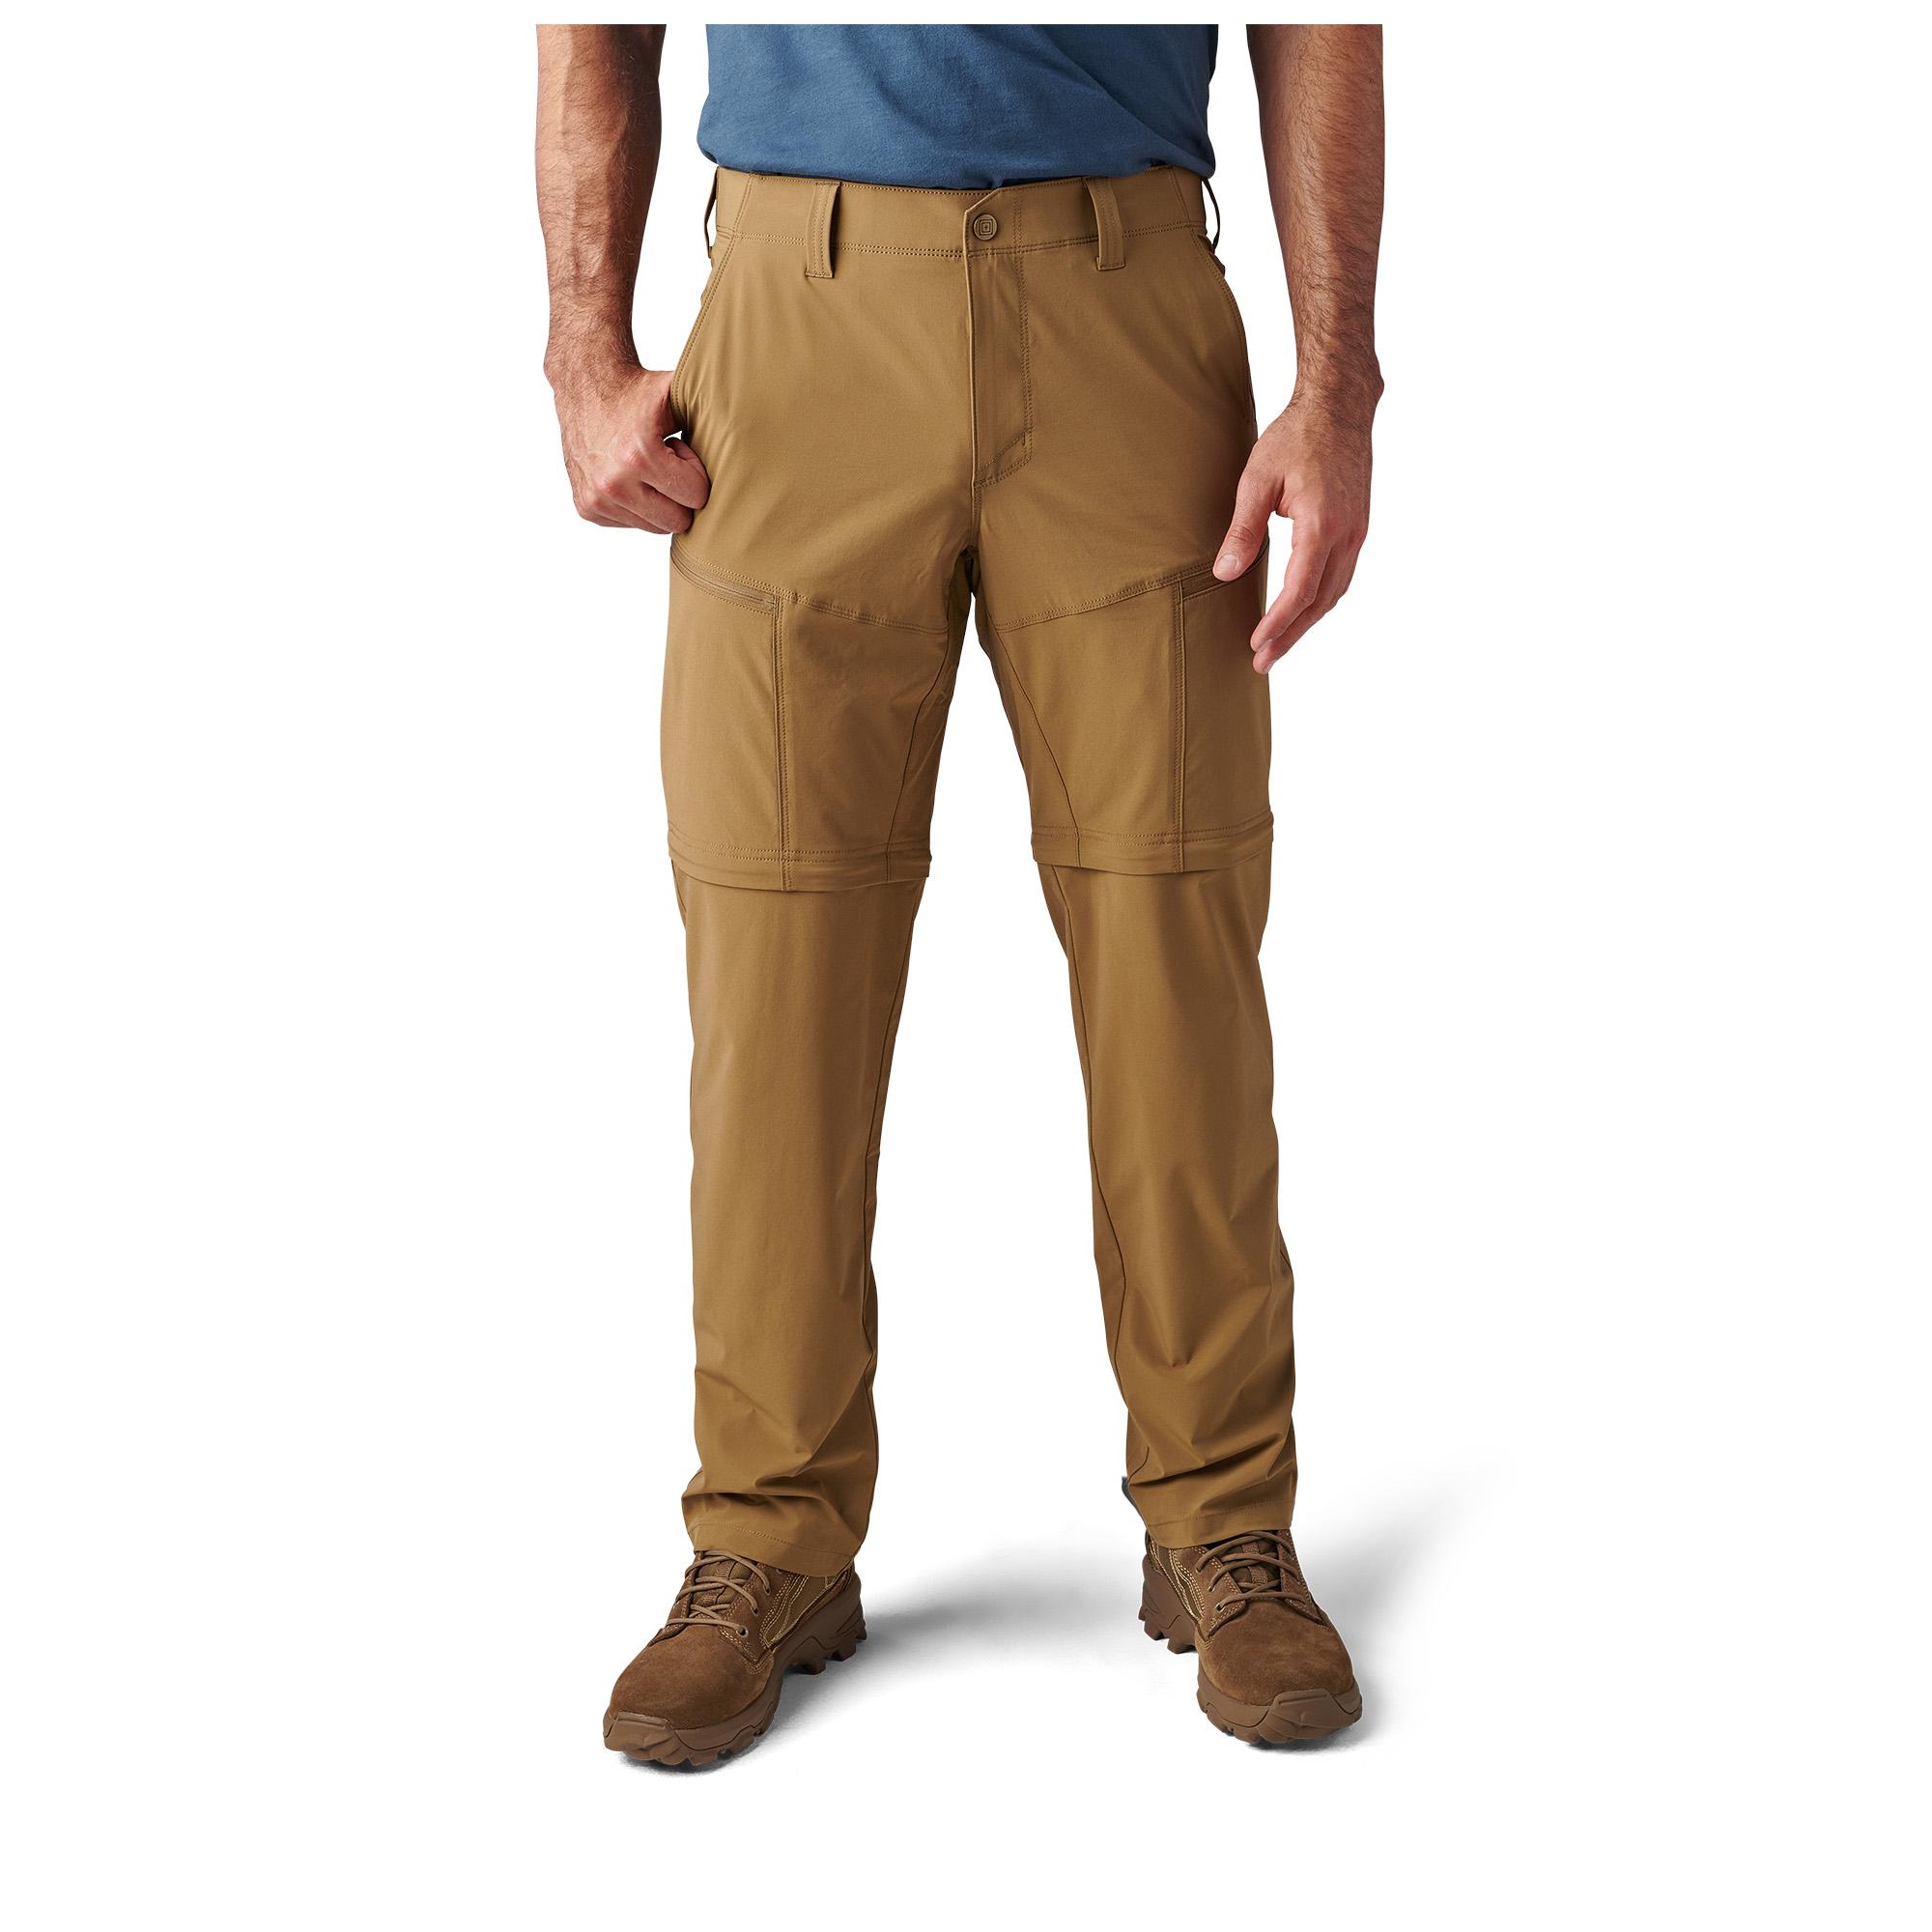 Decoy convertible pant - Pants & shorts